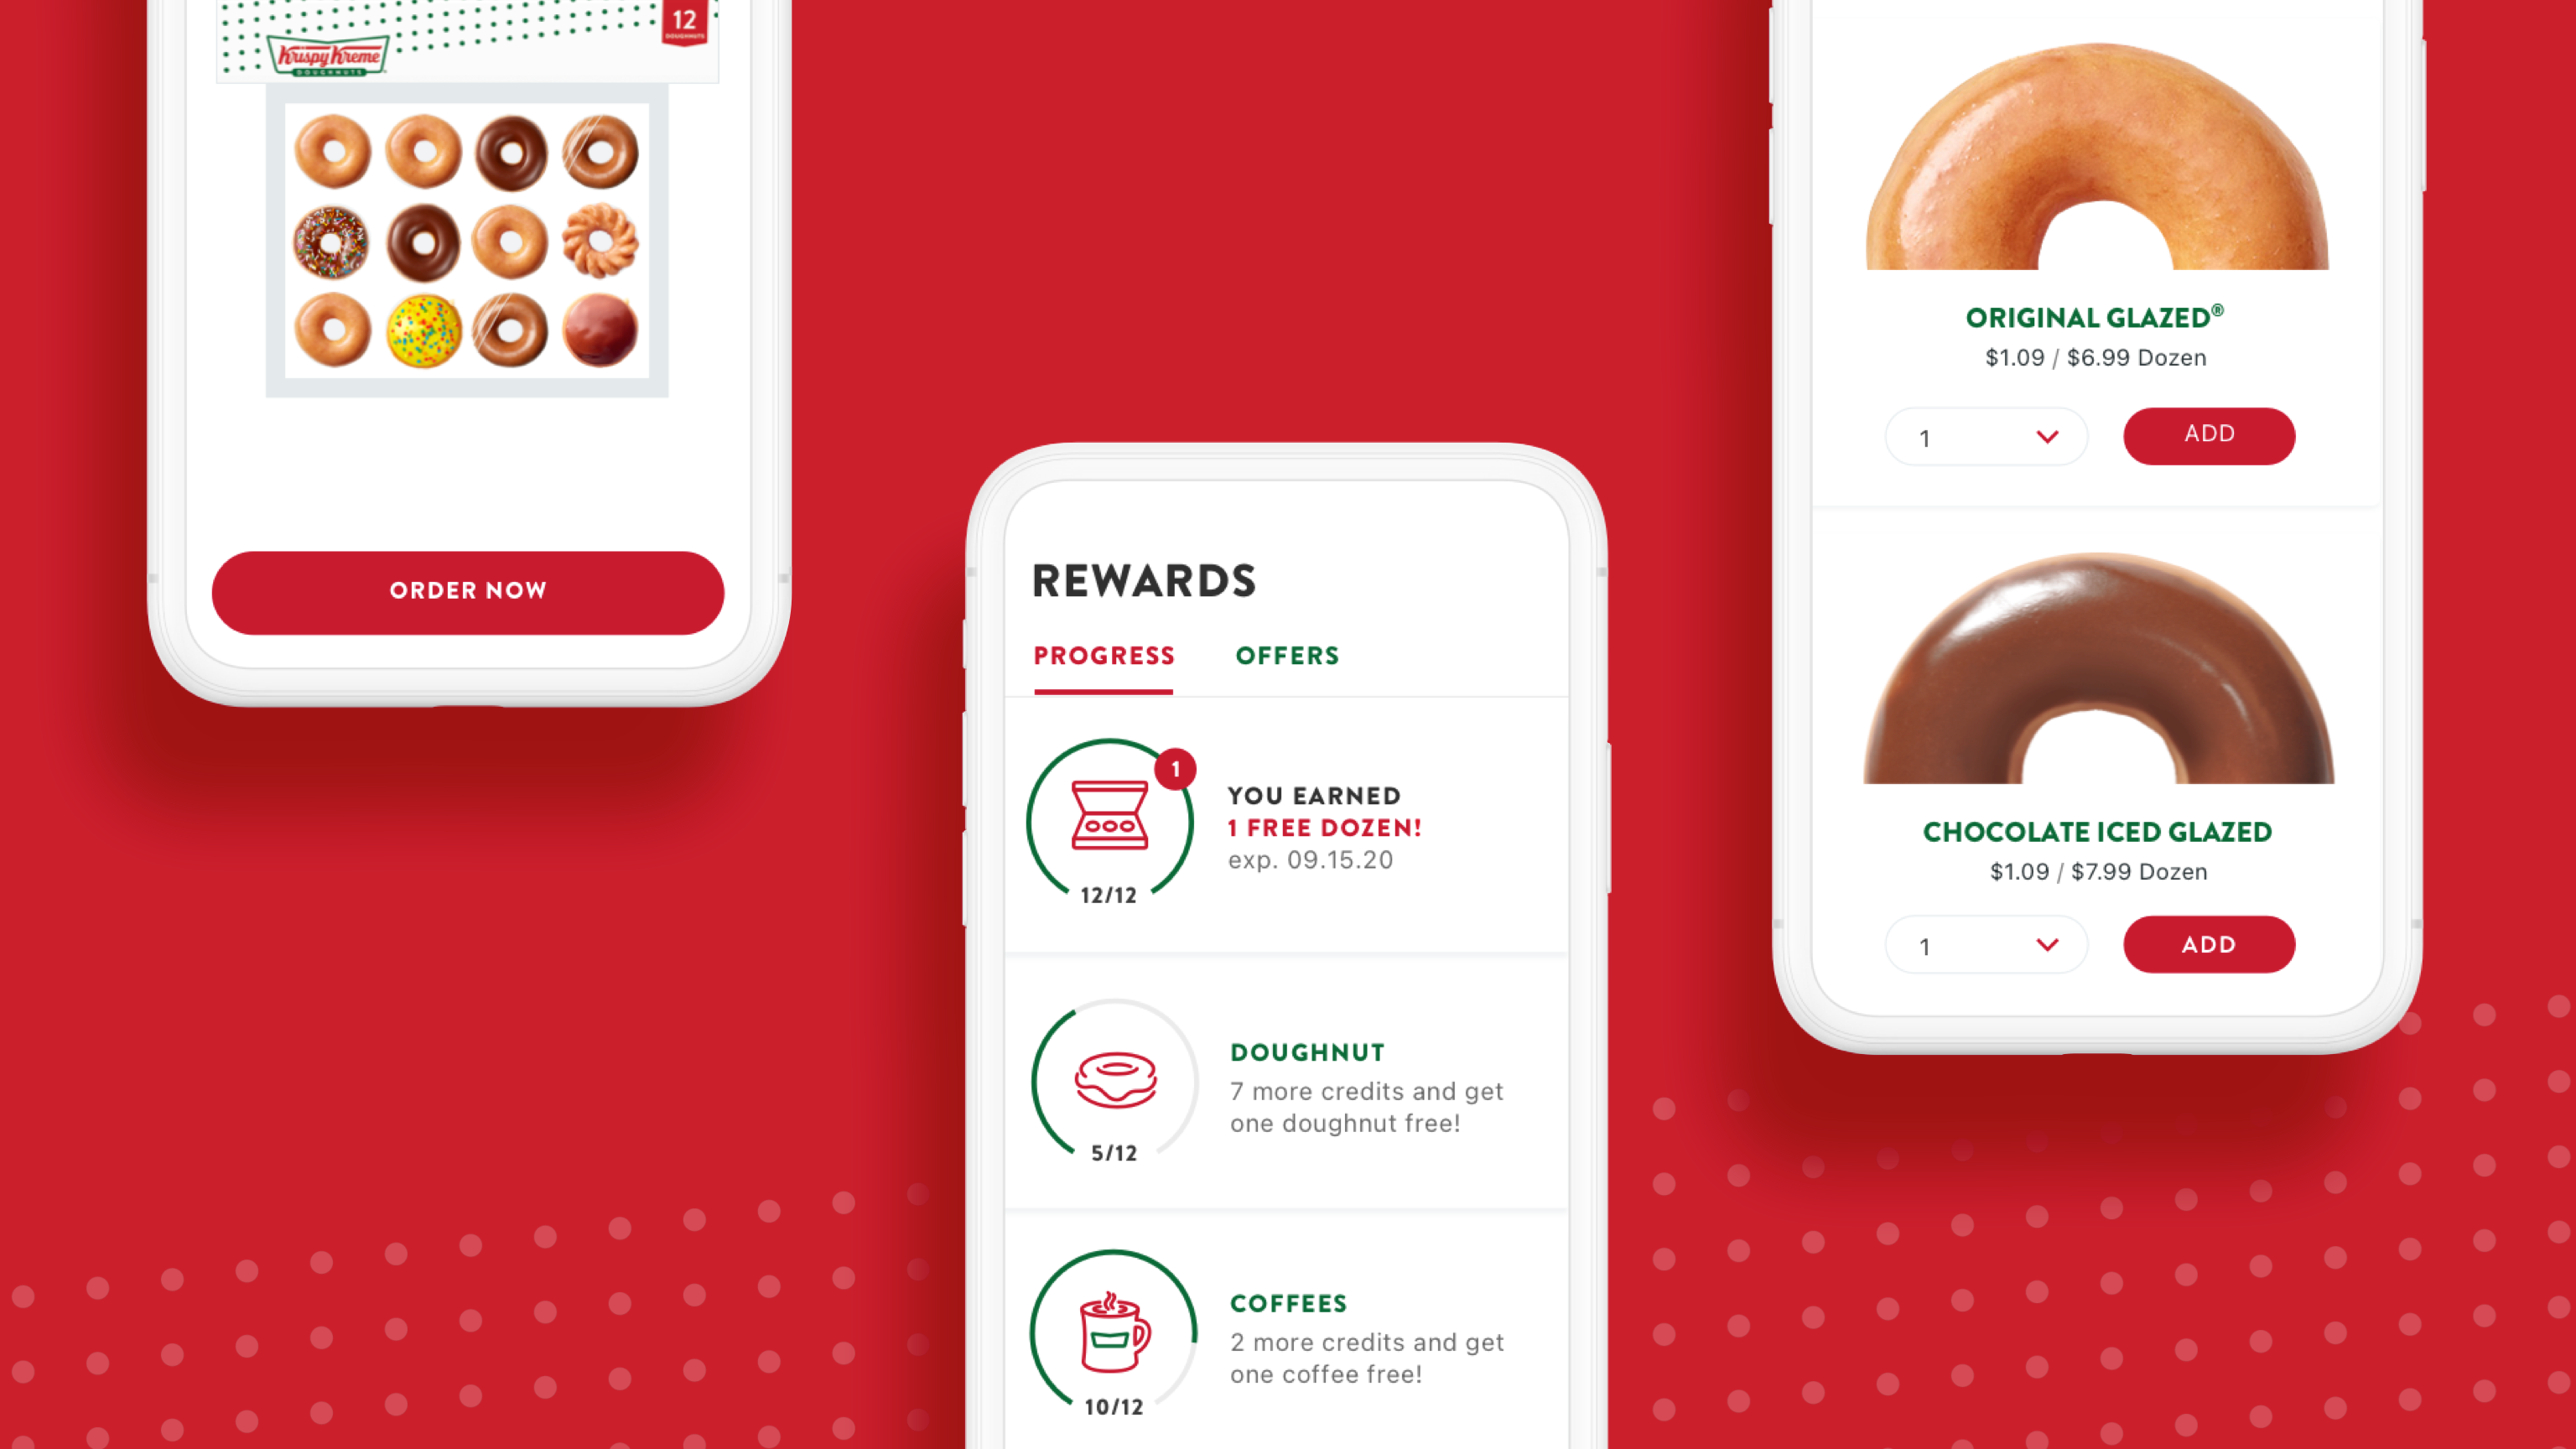 Three screenshots showing Krispy Kreme's mobile app ordering process and rewards progress.